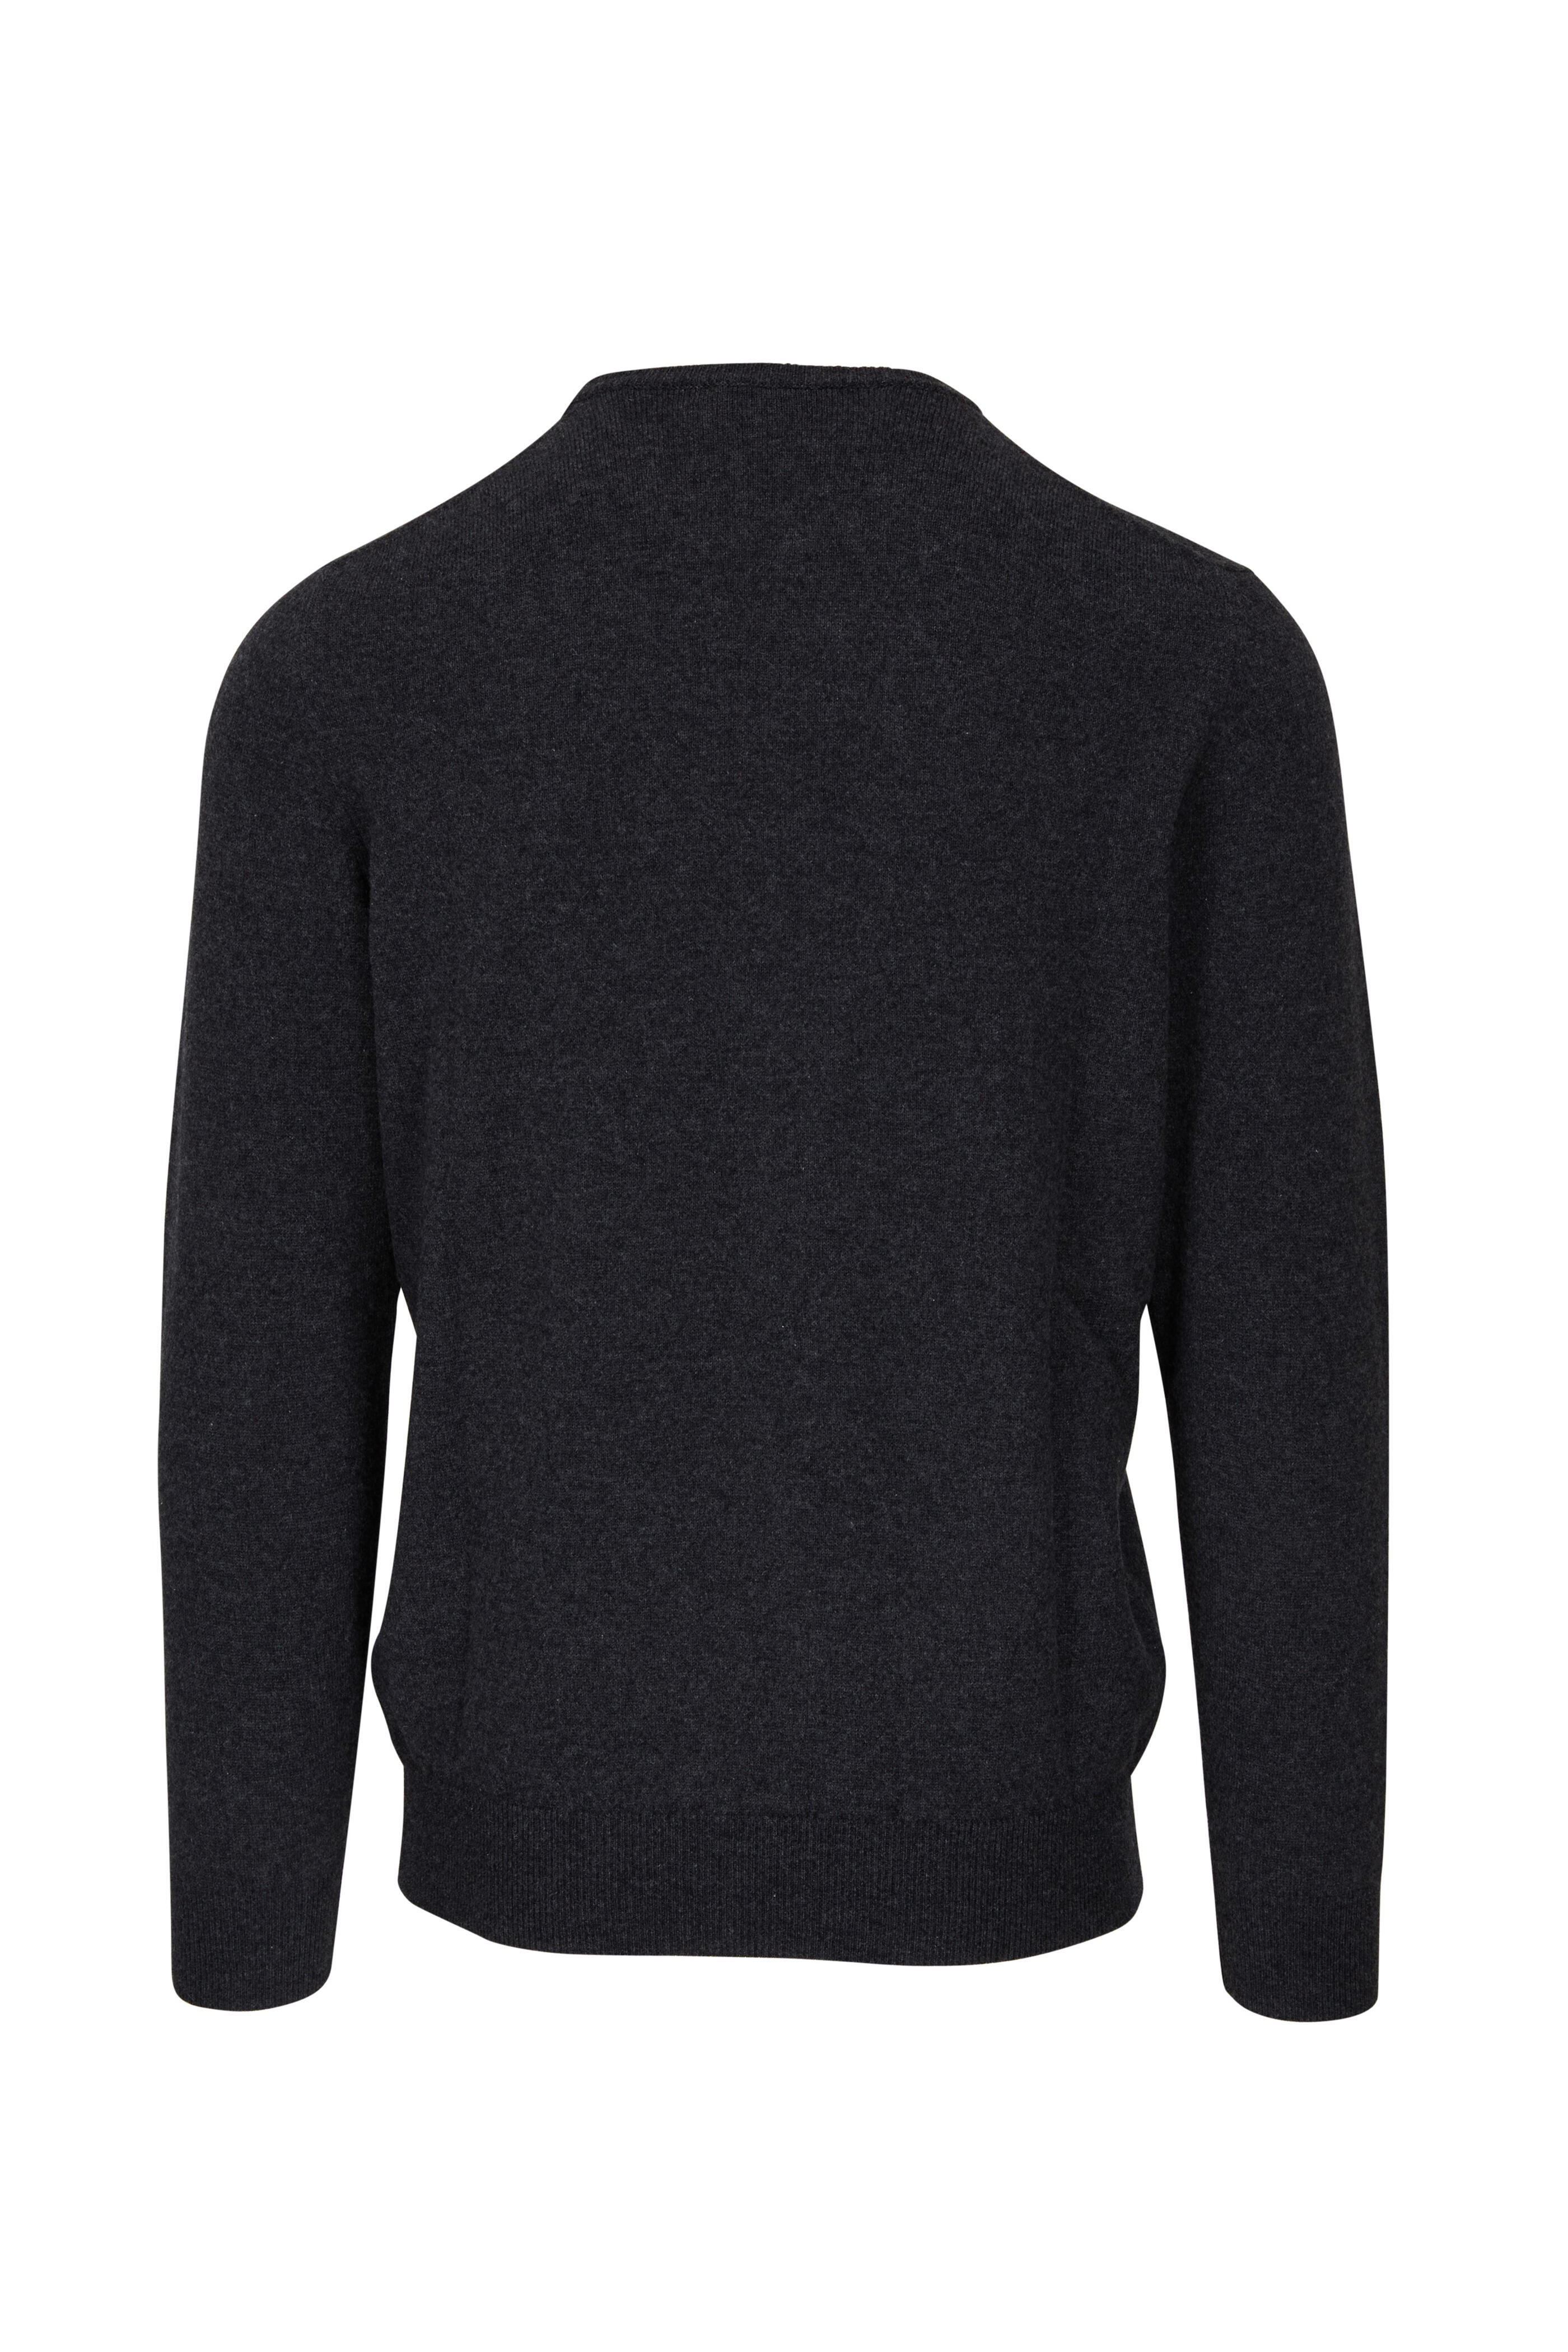 Fratelli Piacenza - Charcoal Cashmere Crewneck Sweater